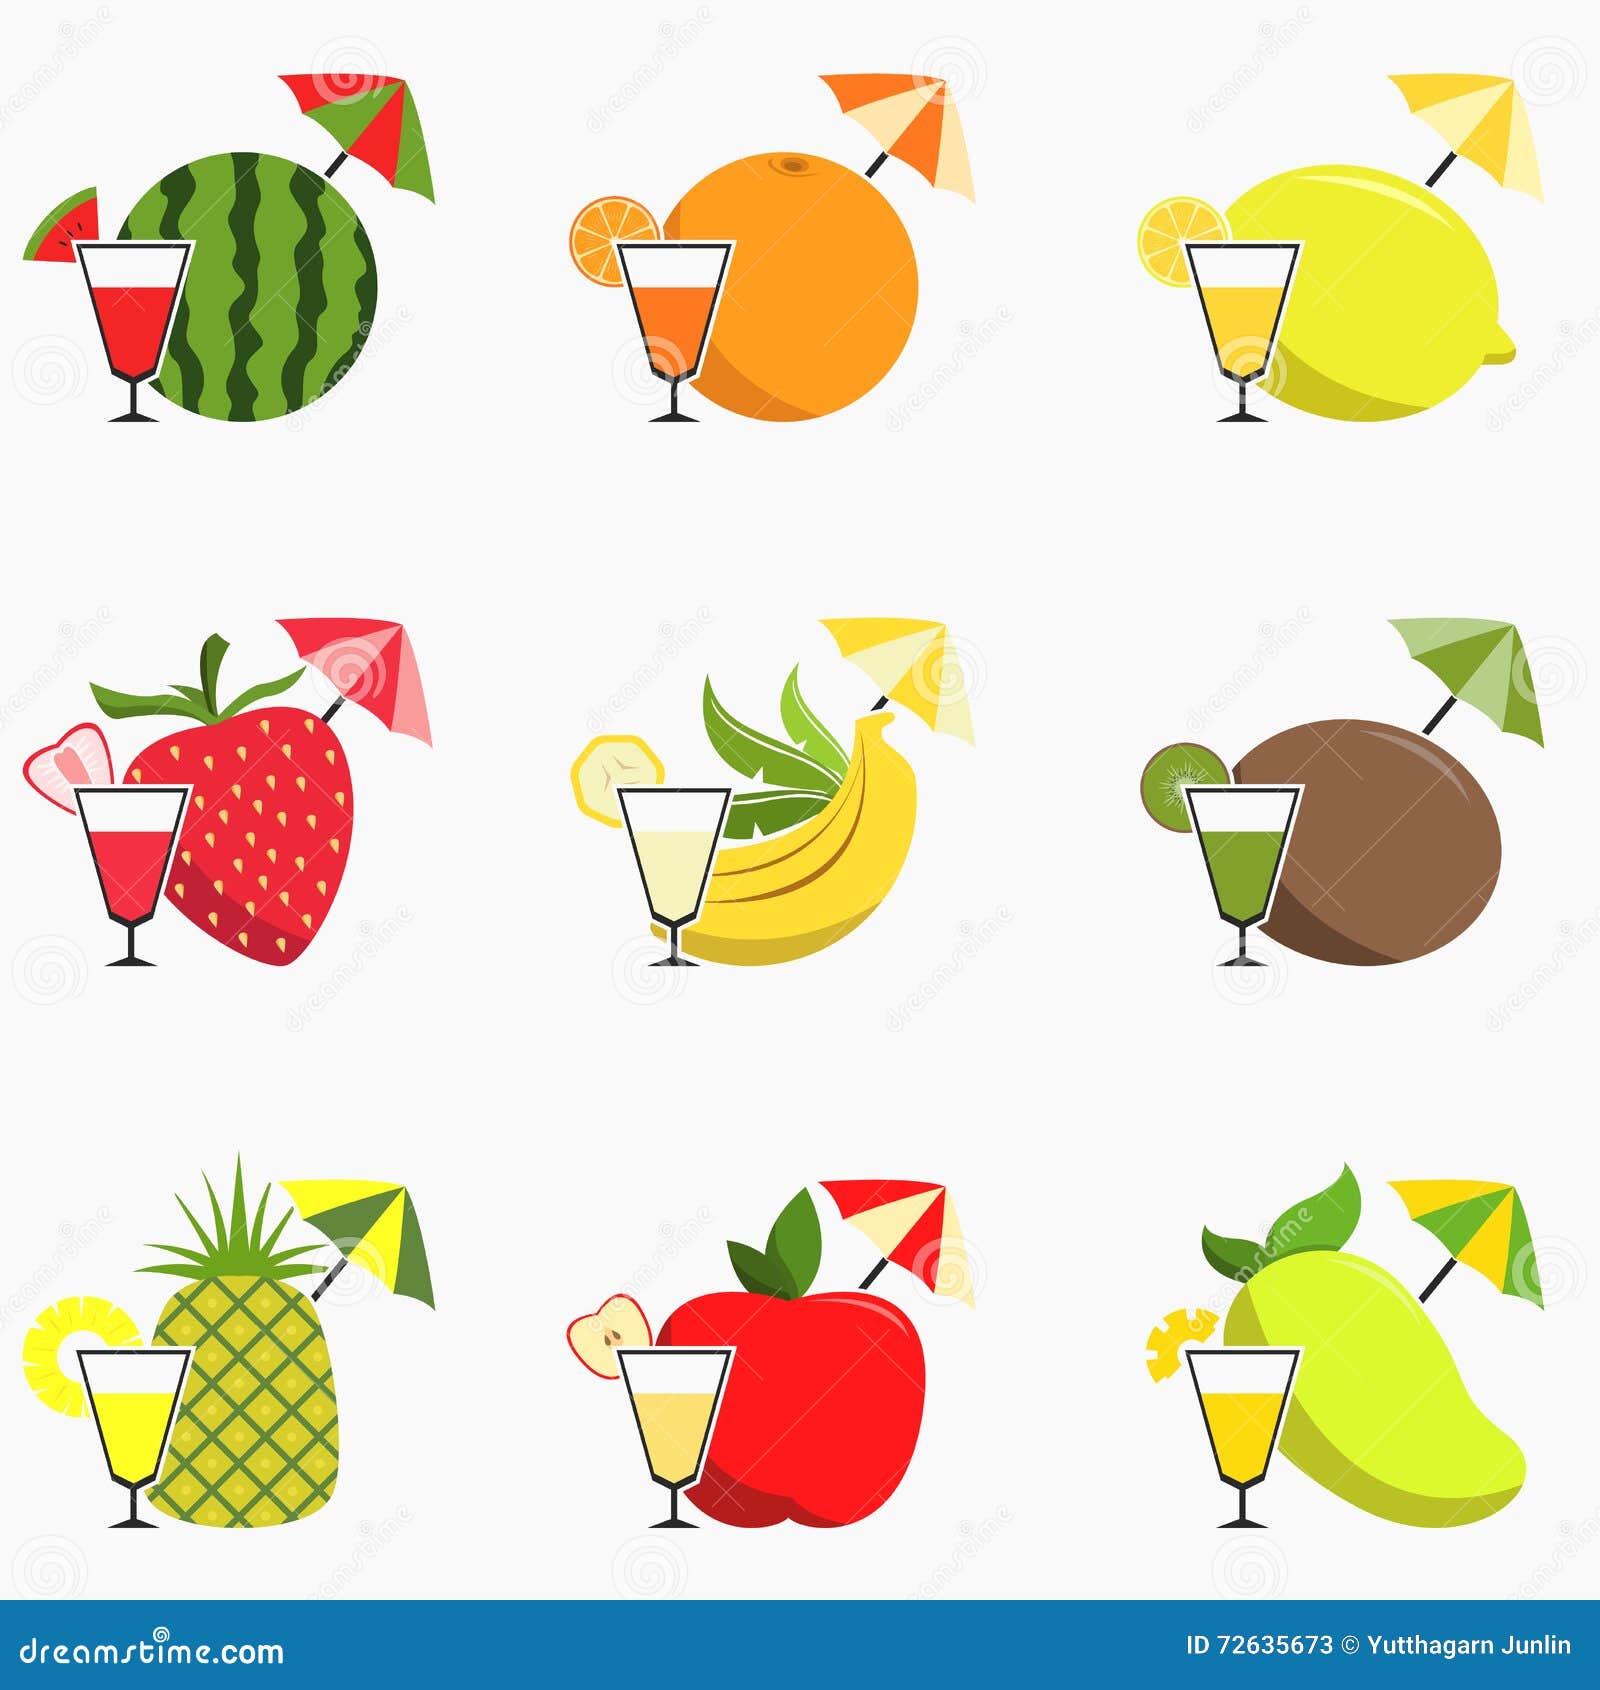 fruitjuice icon